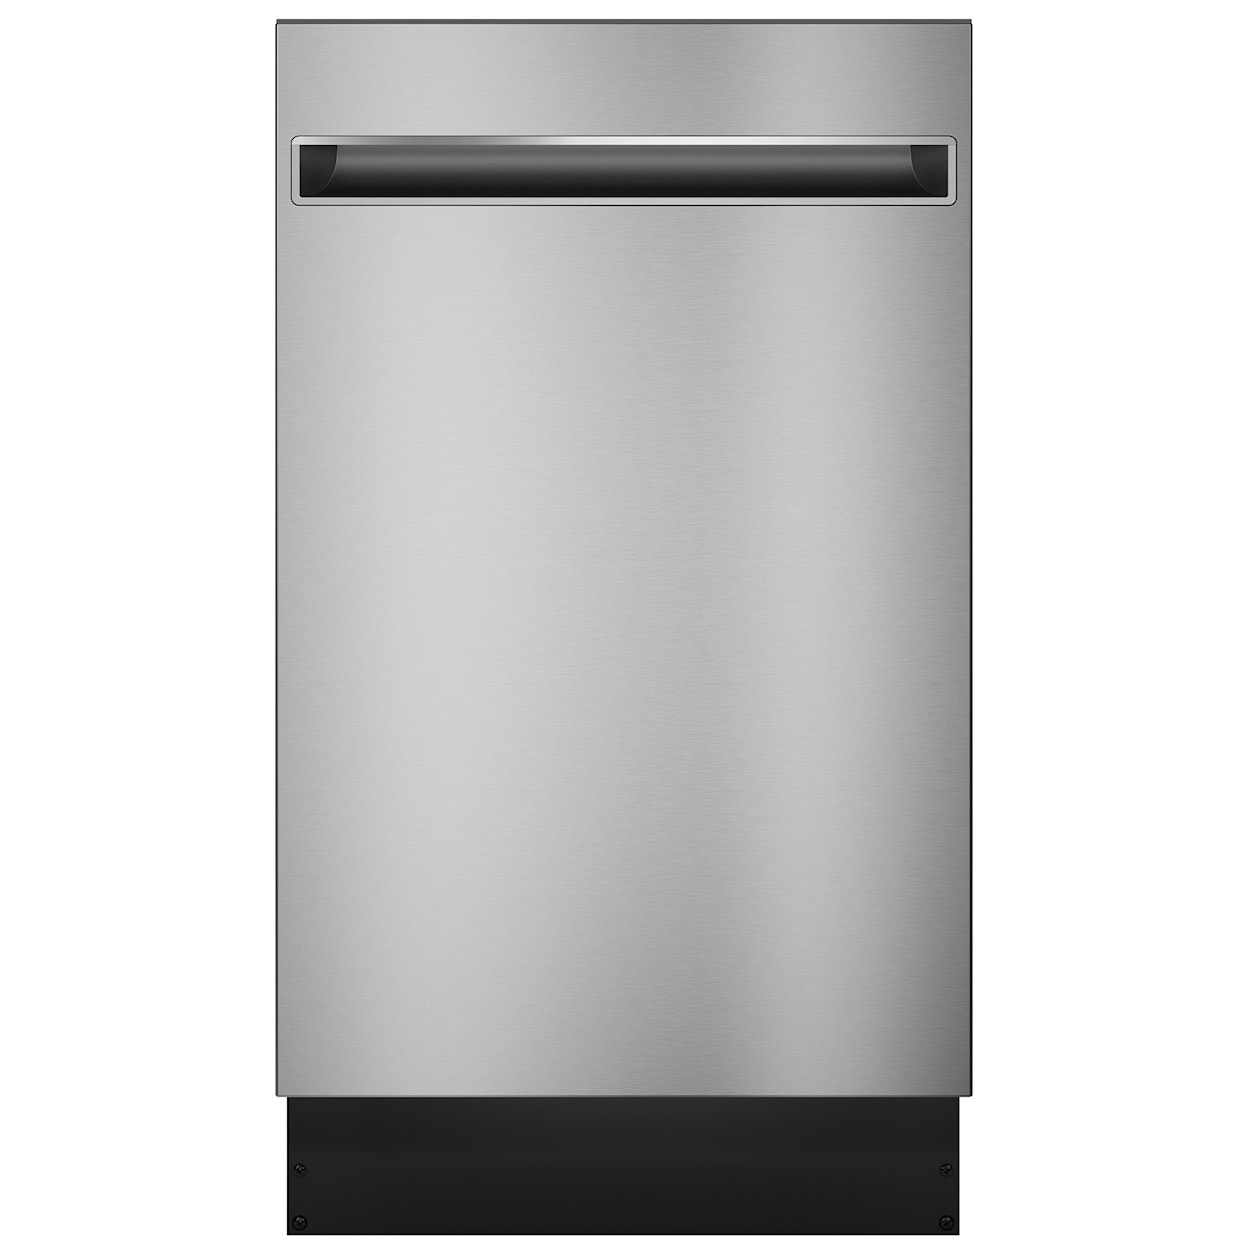 GE Appliances GE Profile Dishwashers GE Profile™ 18" Built-In Dishwasher